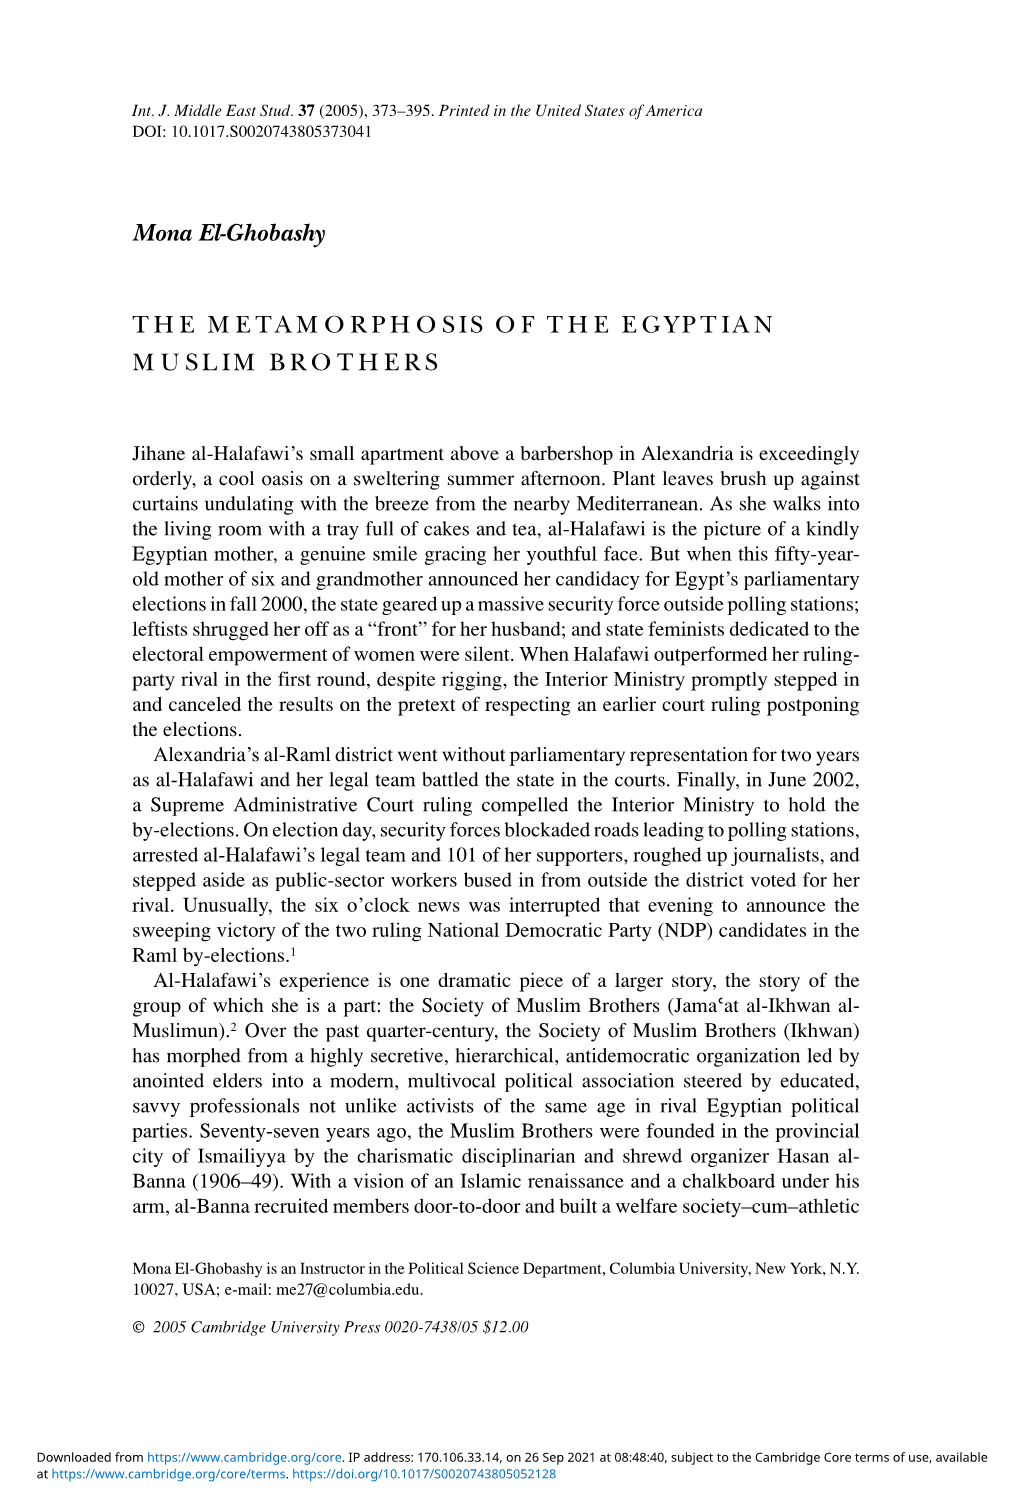 The Metamorphosis of the Egyptian Muslim Brothers